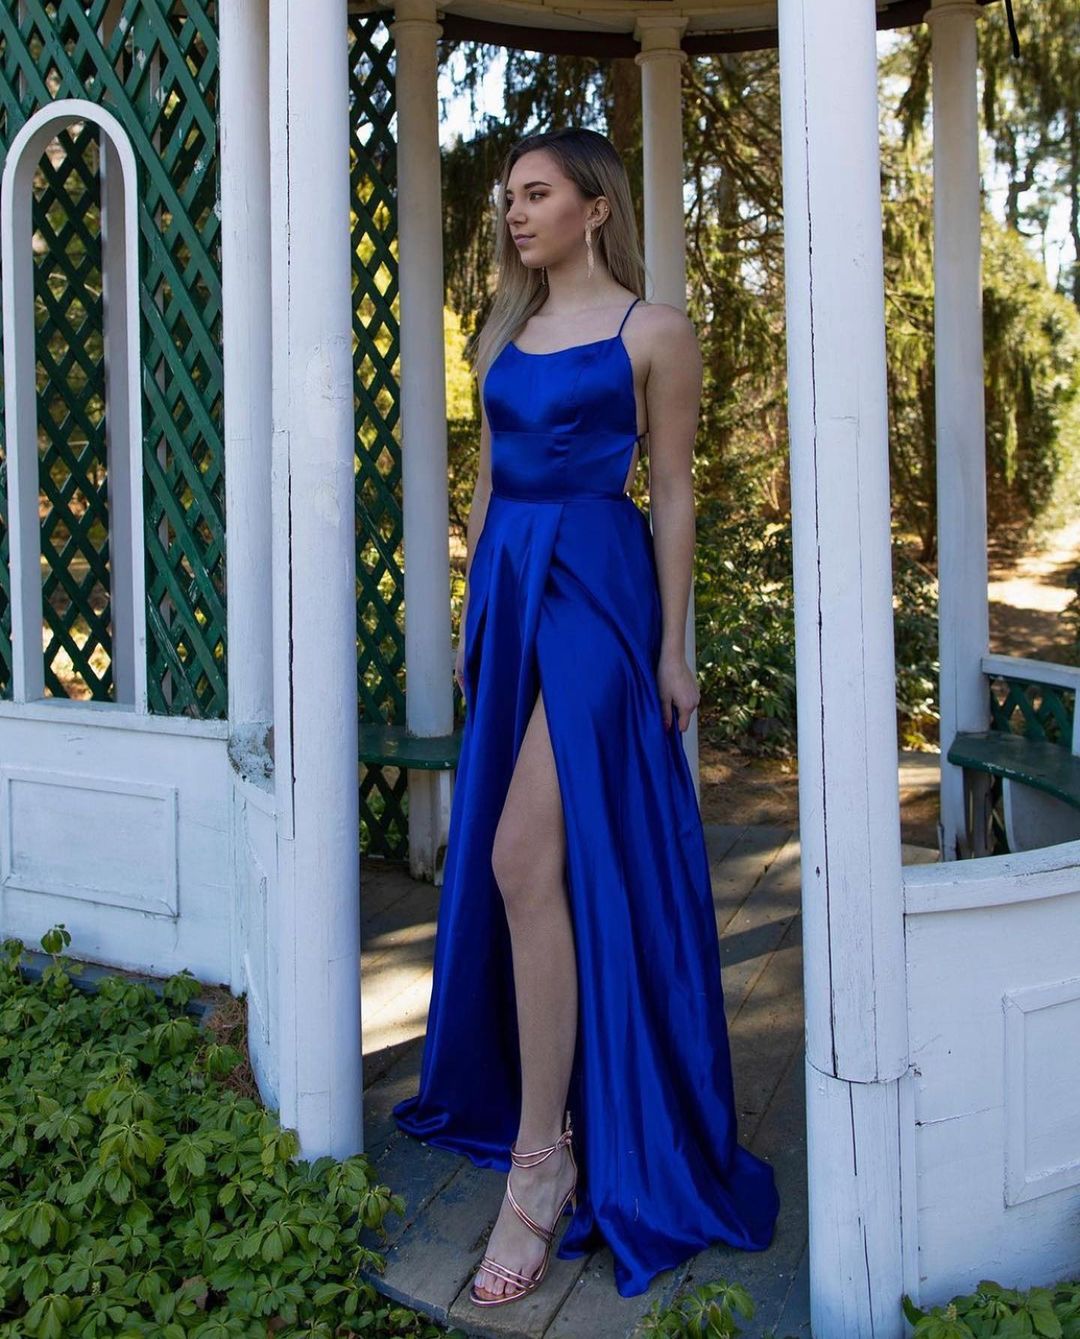 Royal Blue Spaghetti-Strap Prom Dress With Split